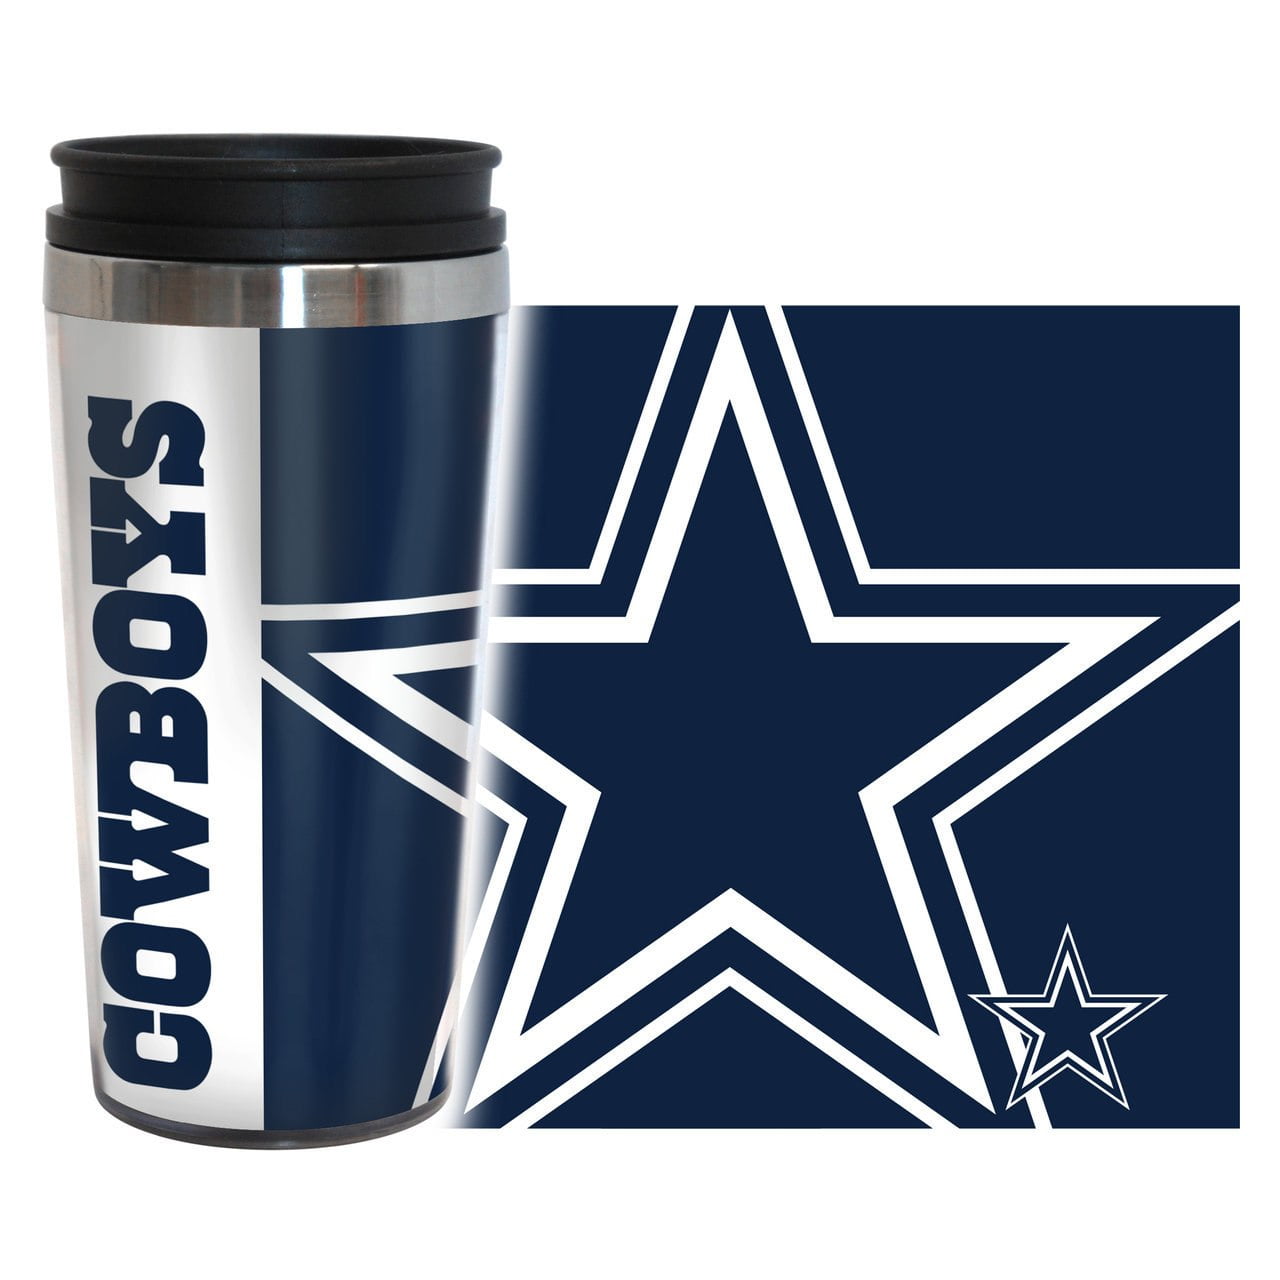 Evergreen Dallas Cowboys, 17oz Boxed Travel Latte, One Size - Kroger